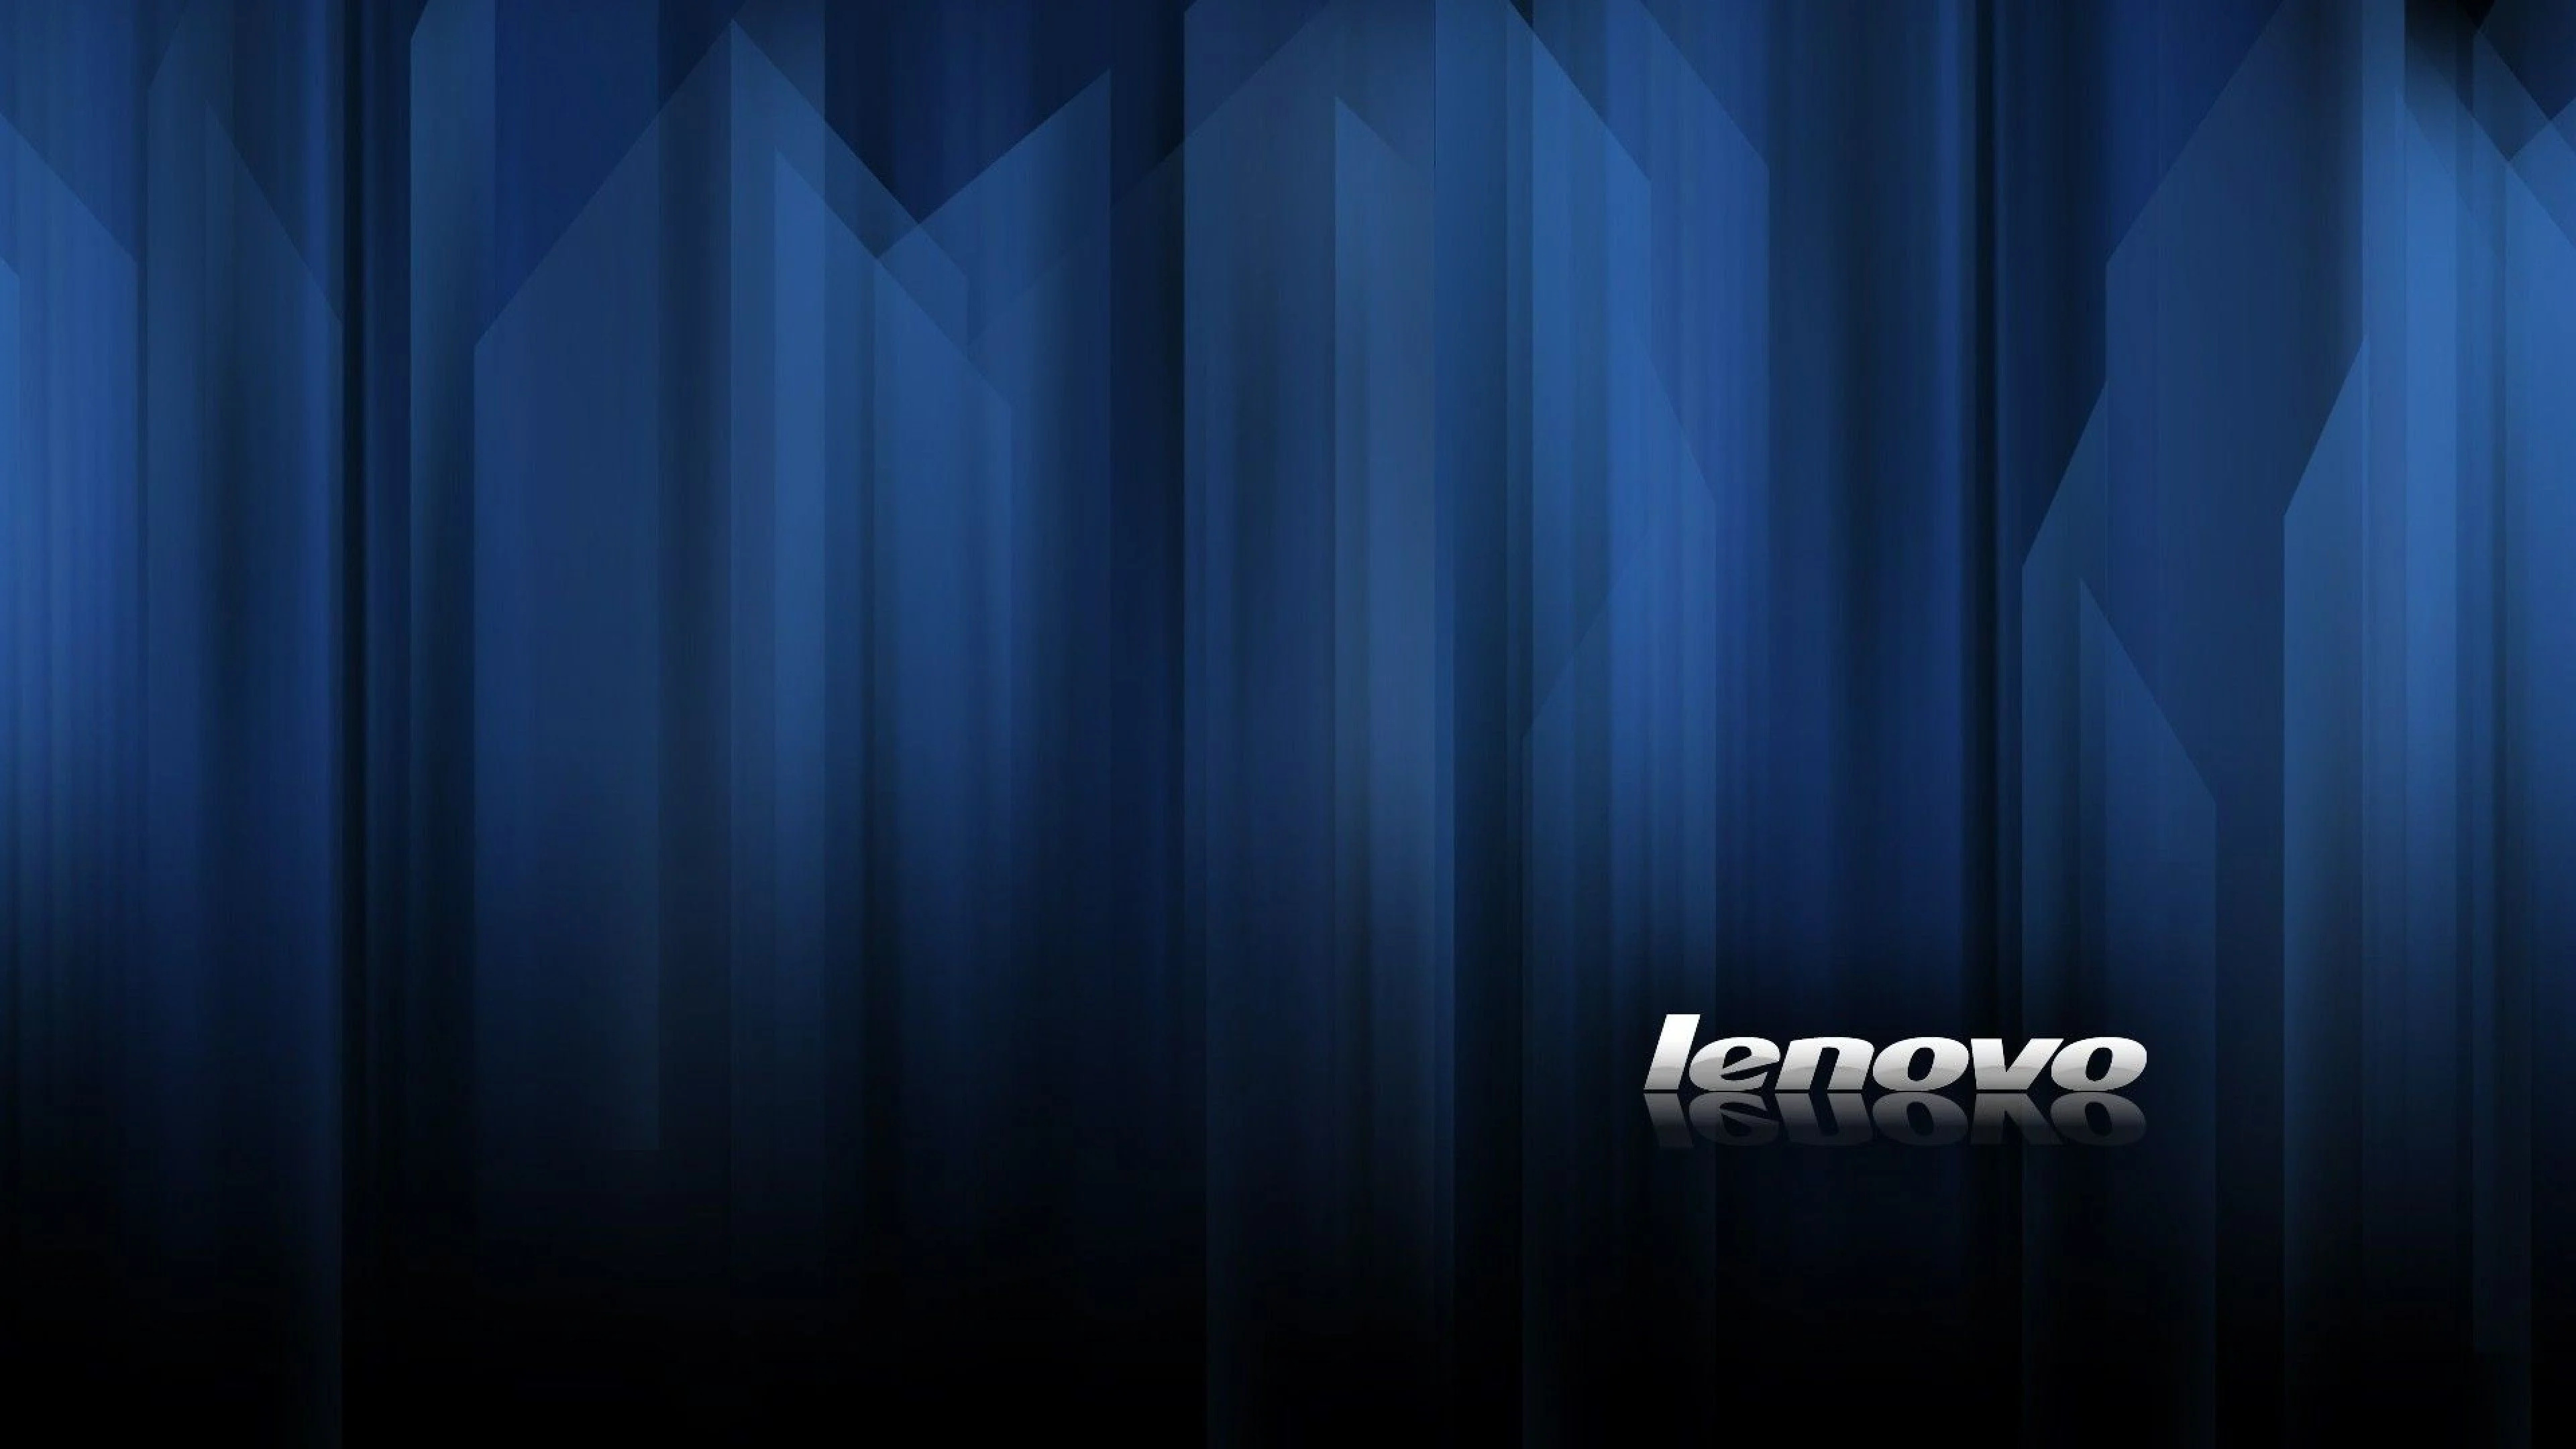 Lenovo wallpapers, 4K desktop backgrounds, High-resolution images, Tech aesthetics, 3840x2160 4K Desktop